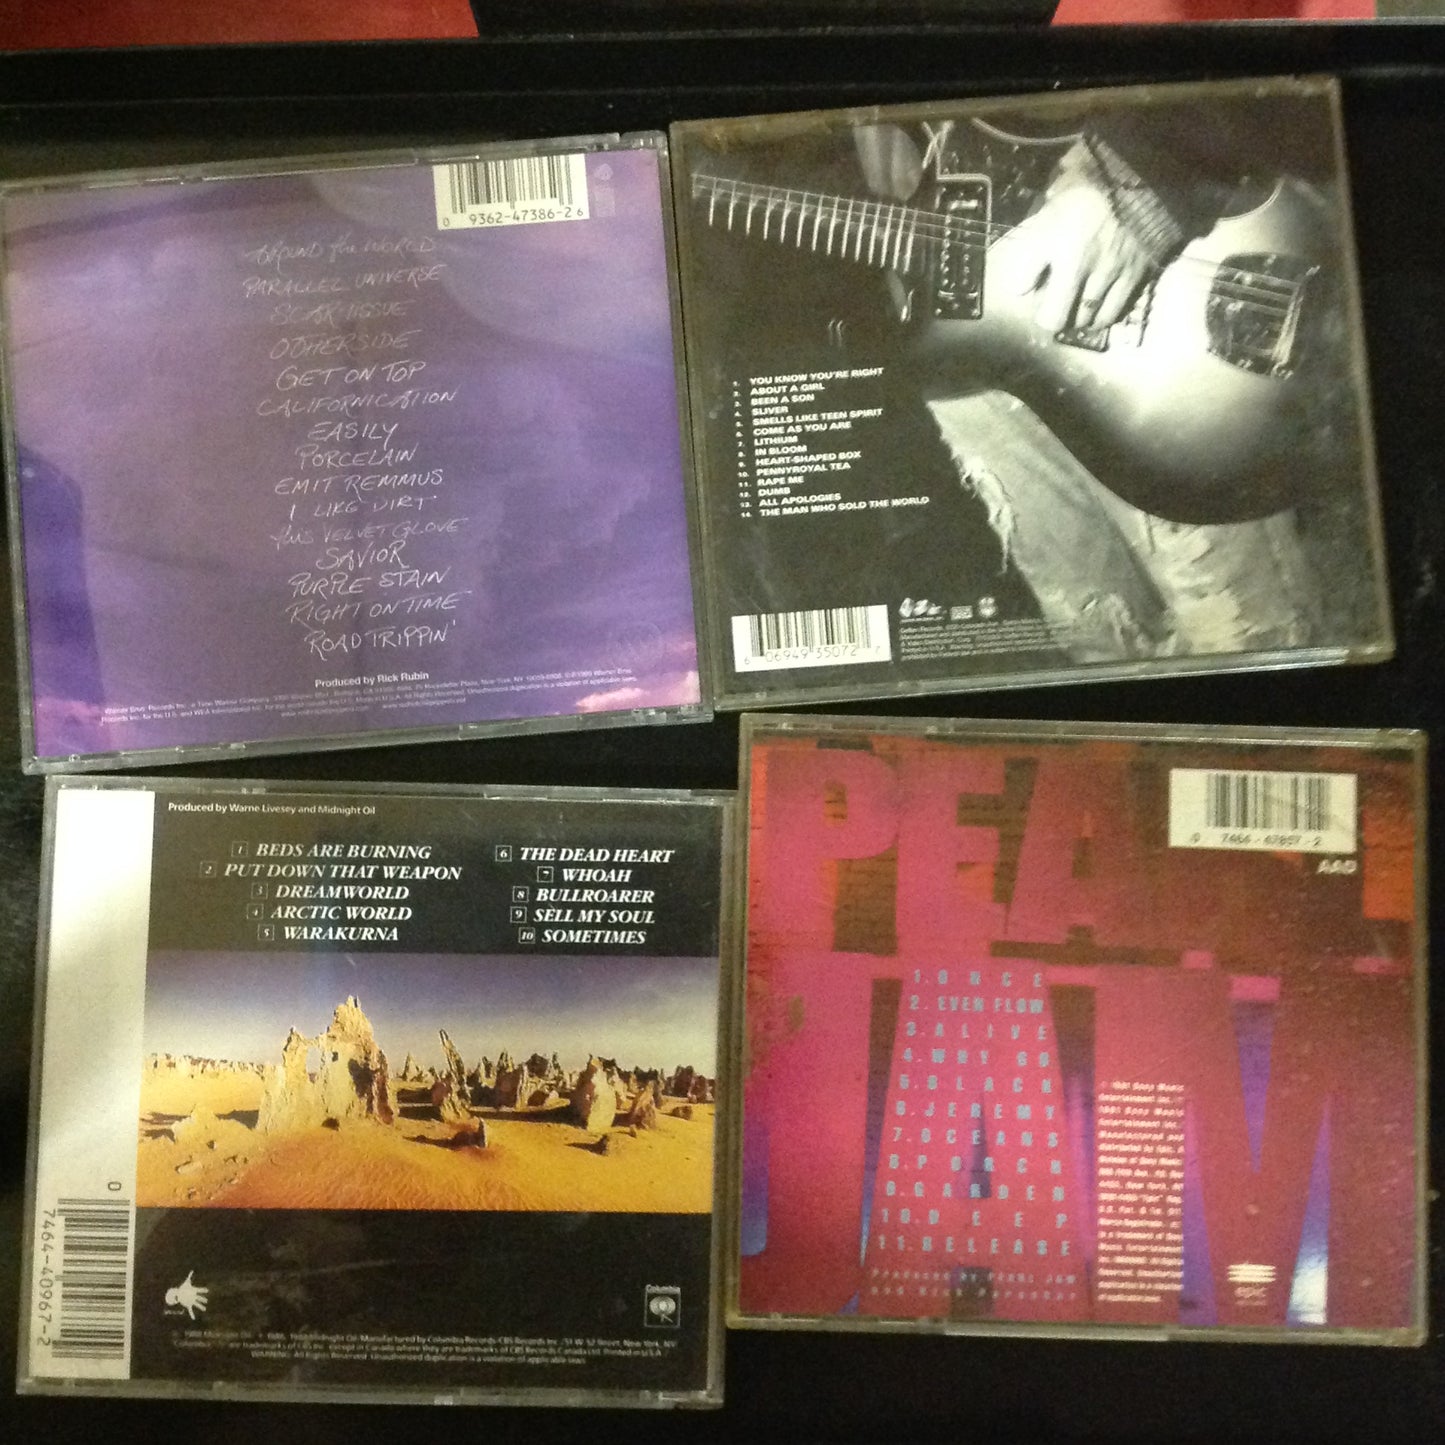 4 Disc SET BARGAIN CDs alternative rock grunge RHCP Red Hot Chili Peppers Nirvana Pearl Jam Midnight Oil